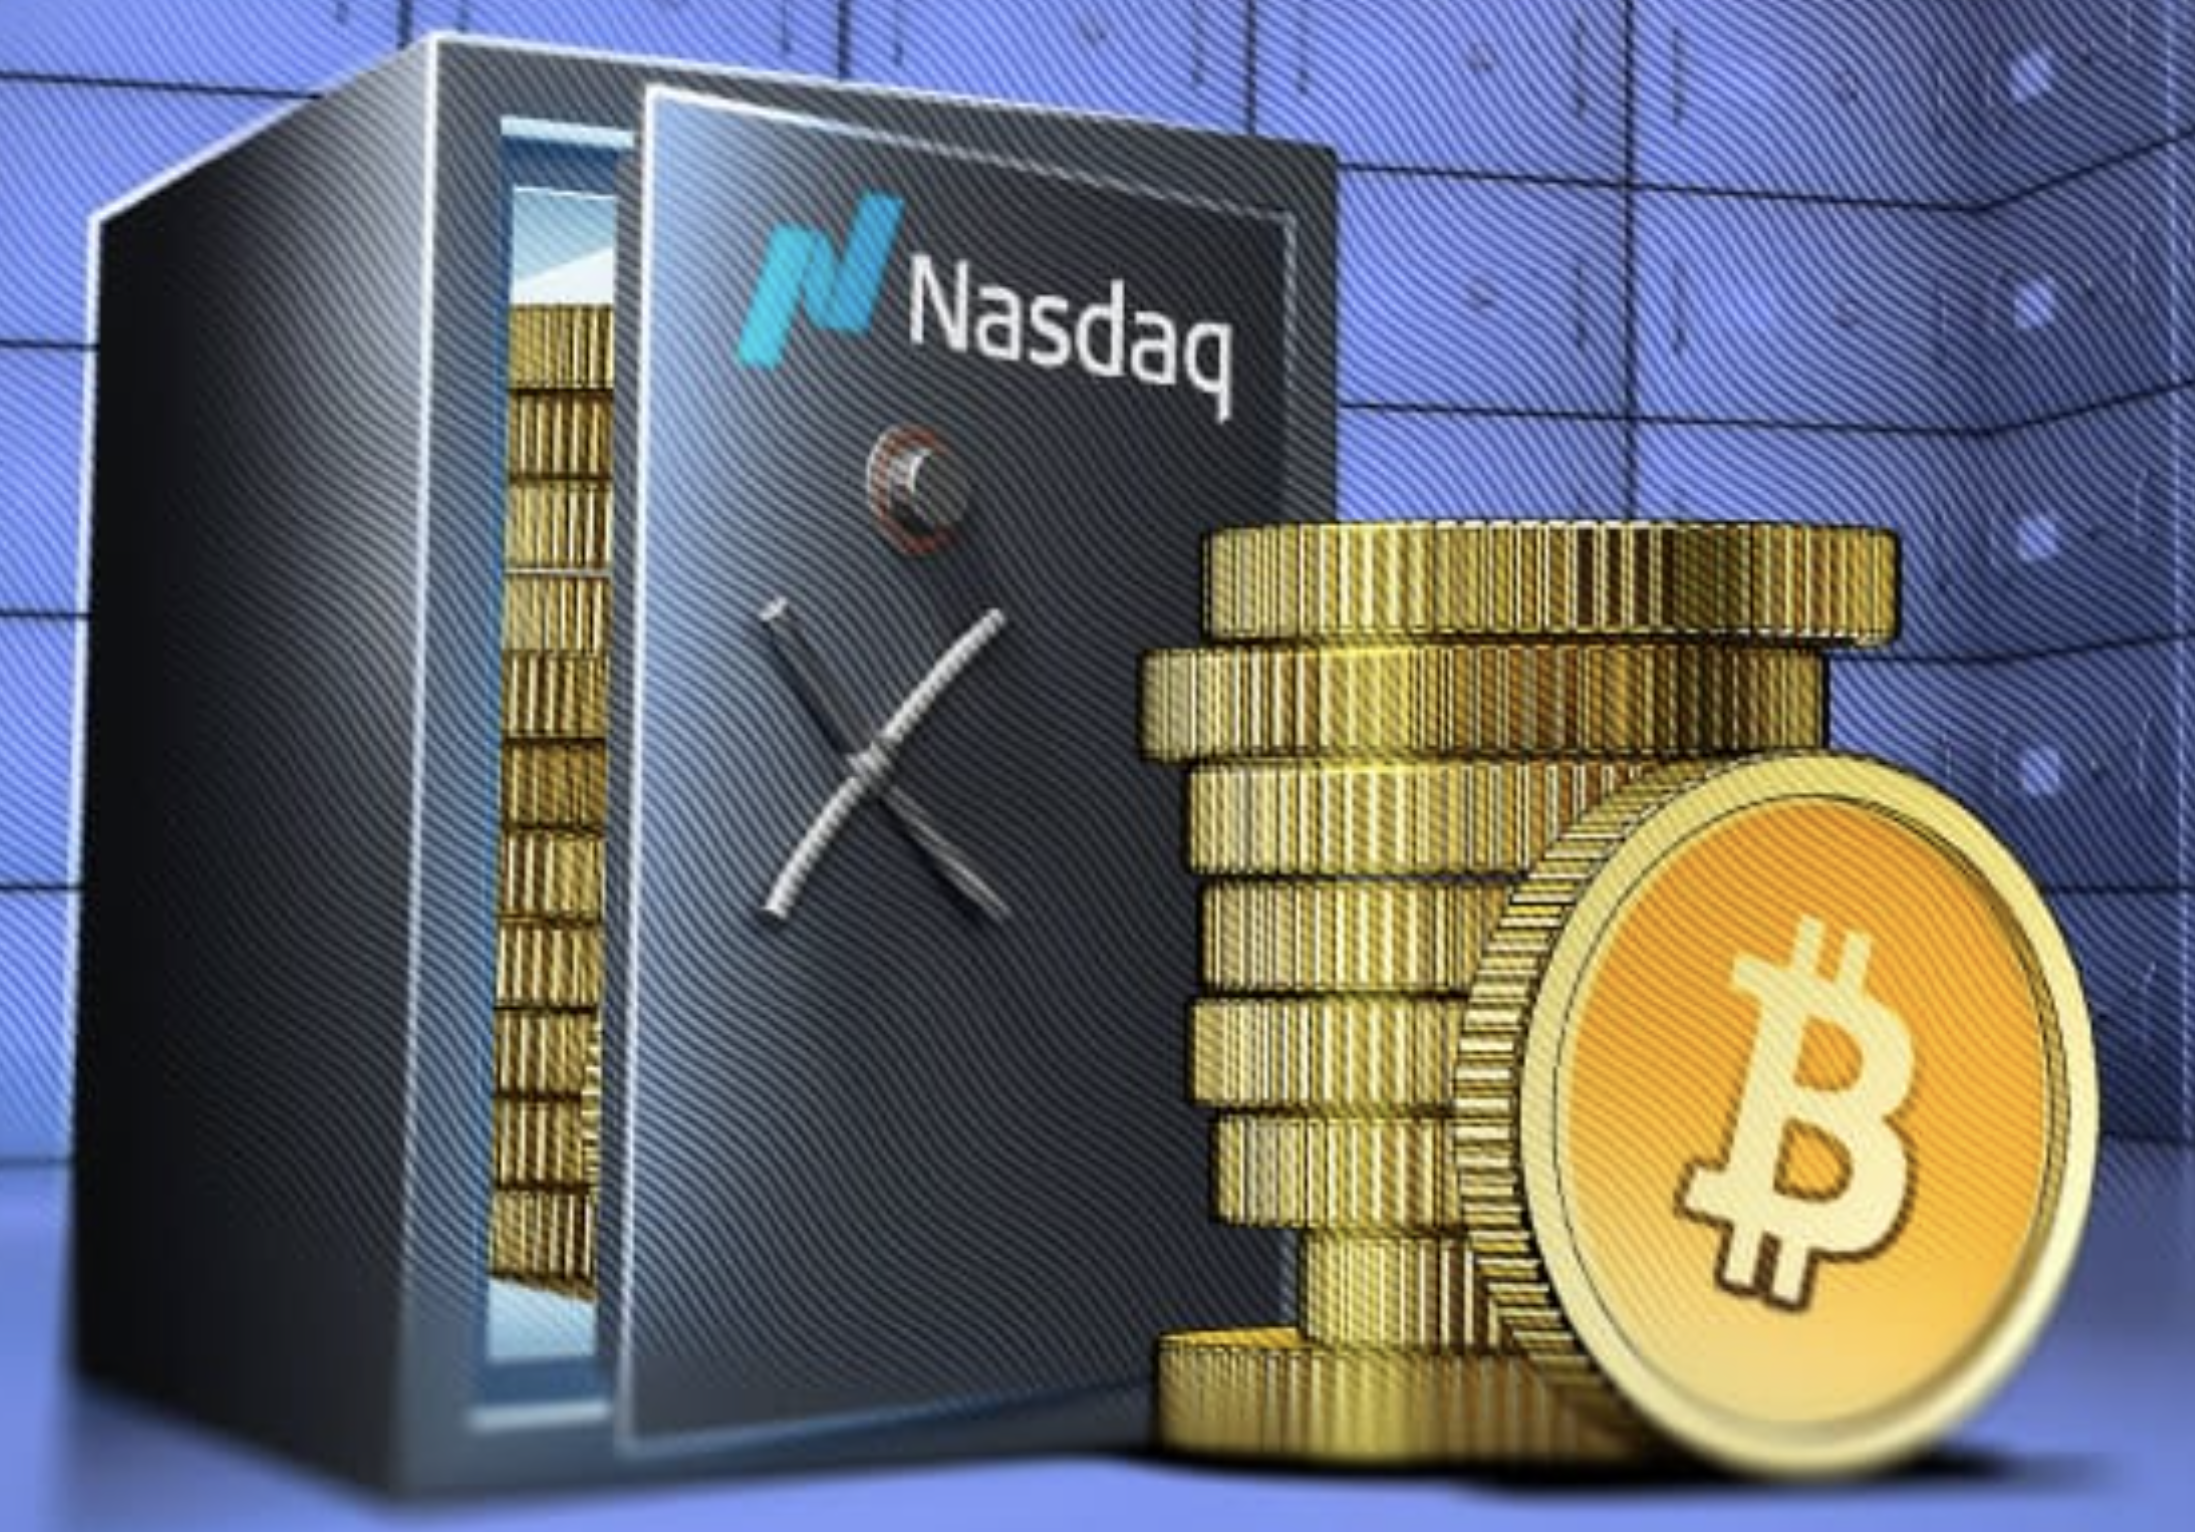 Nasdaq Abandons Plan for Crypto Custody Service Because of US Regulatory Uncertainty